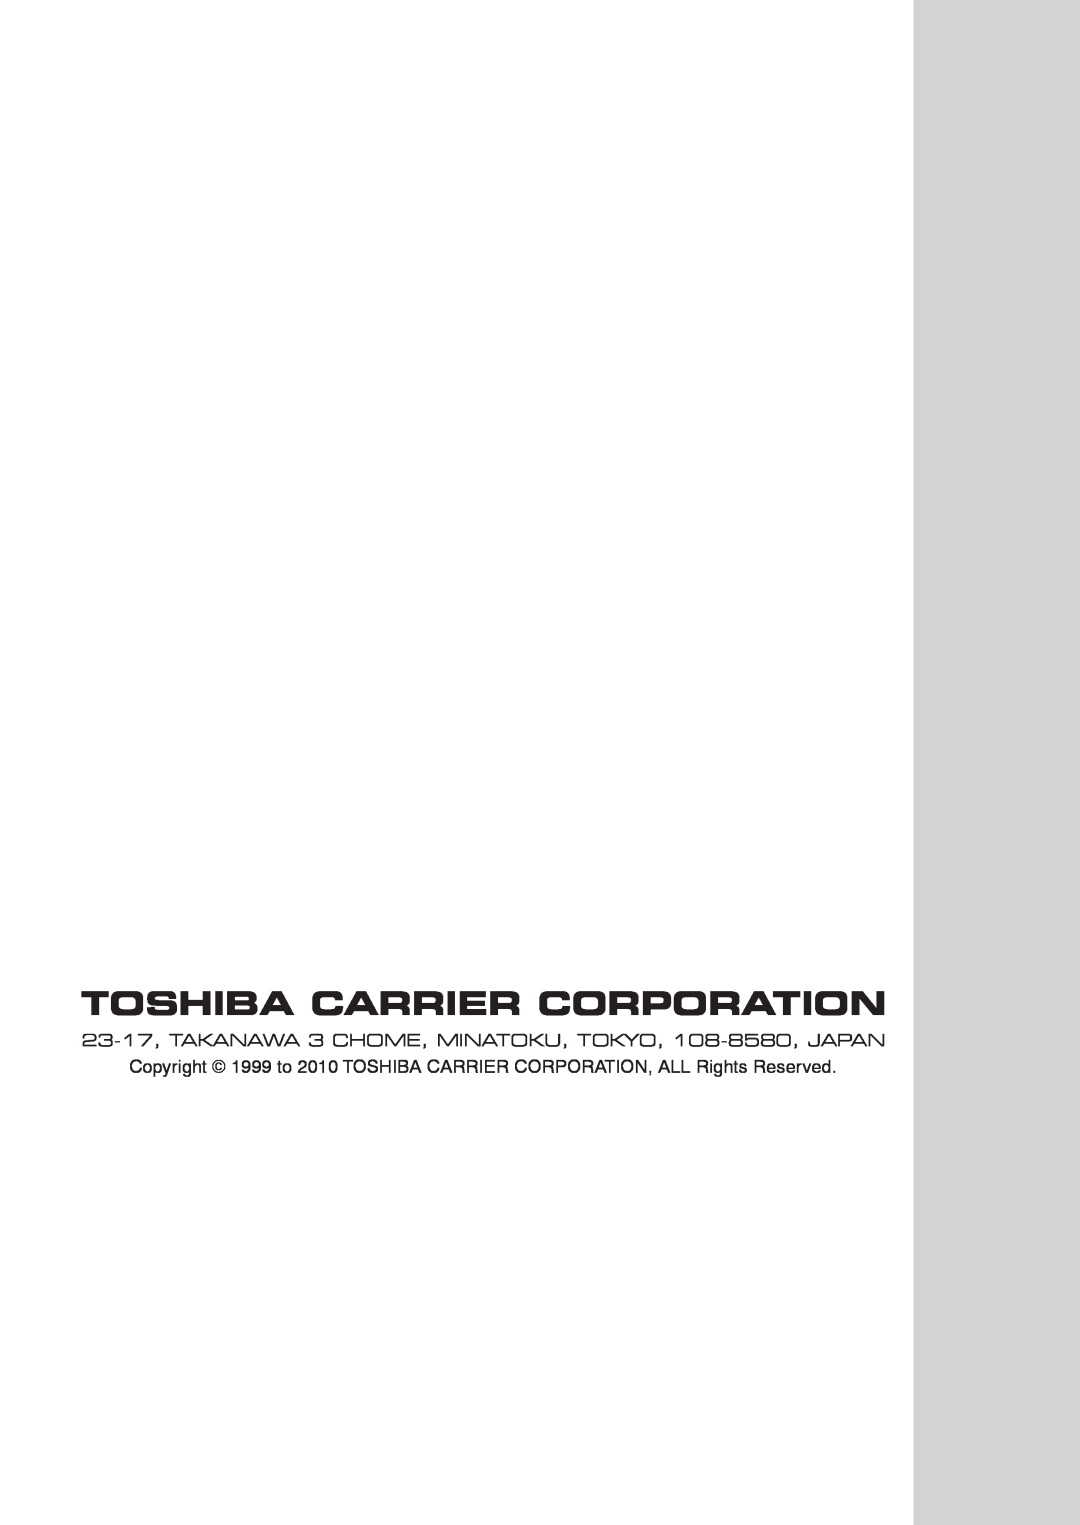 Toshiba RAV-SM2802DT-TR, RAV-SM2802DT-E, RAV-SM2242DT-TR service manual Toshiba Carrier Corporation 